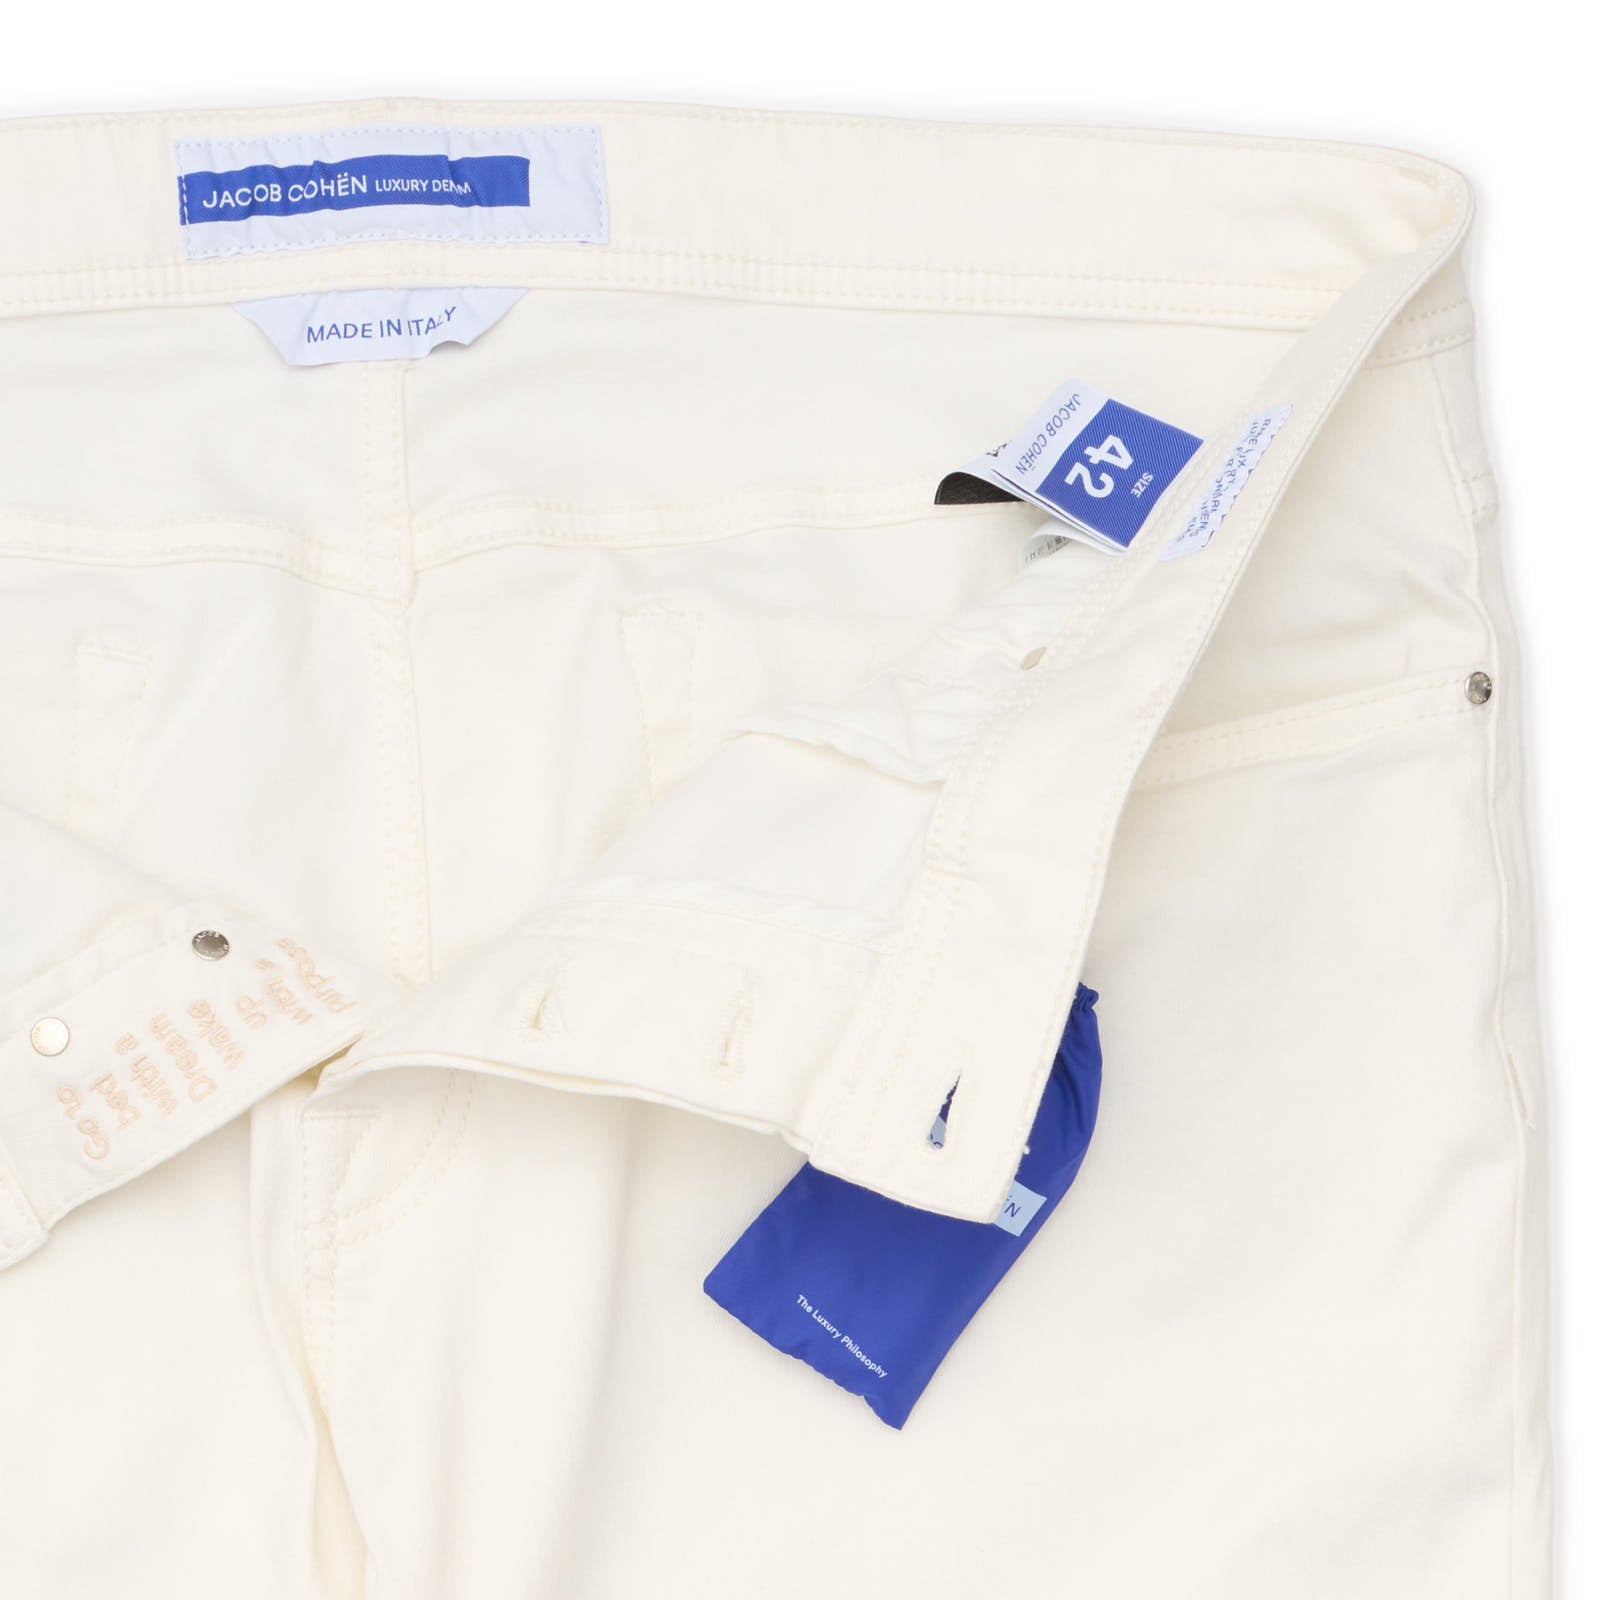 JACOB COHEN "BARD"Handmade White Luxury Denim Stretch Jeans Pants NEW 42